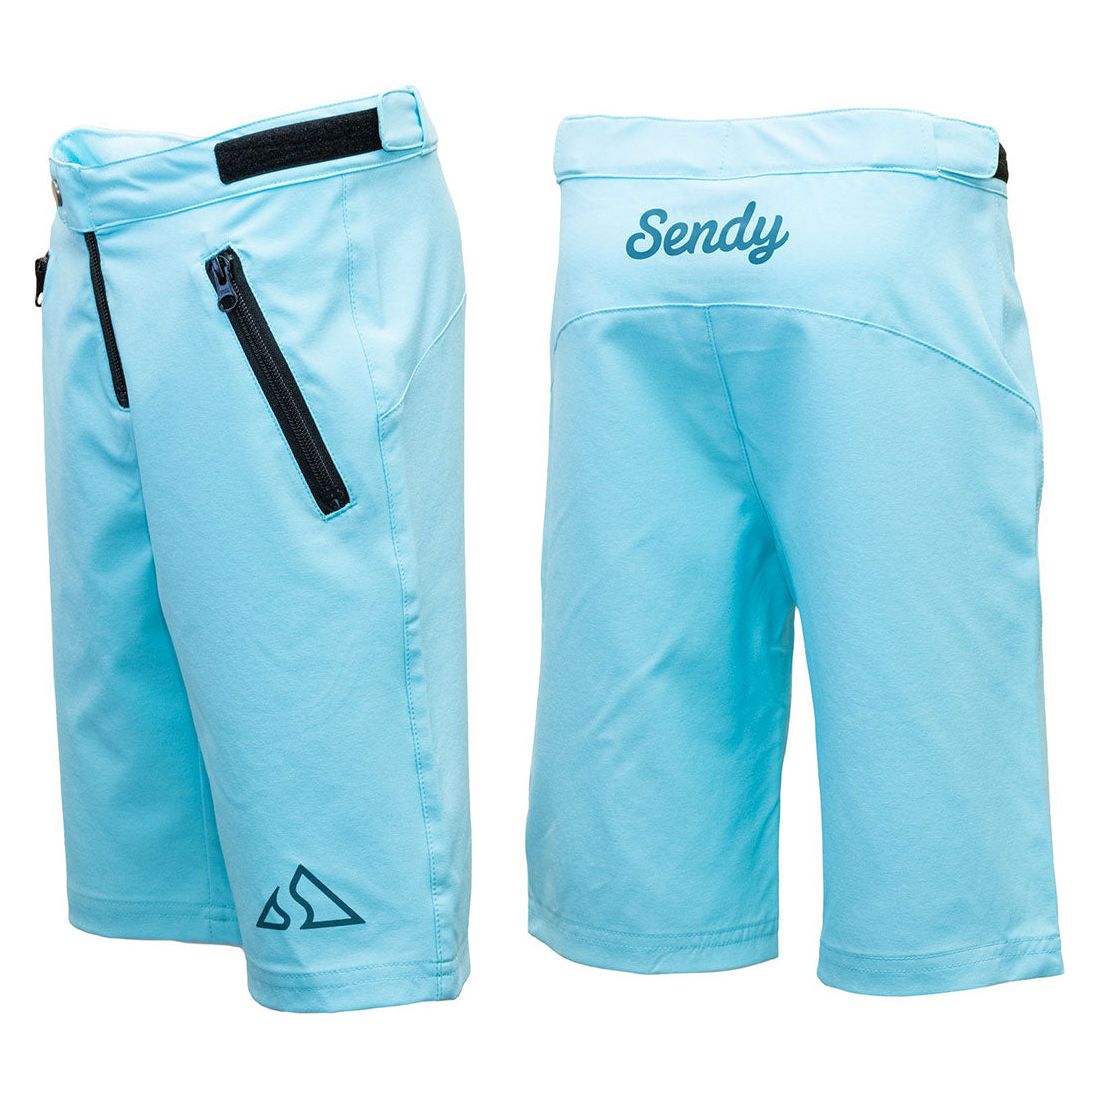 Sendy Send It Youth Shell Shorts - Youth L - The Gem